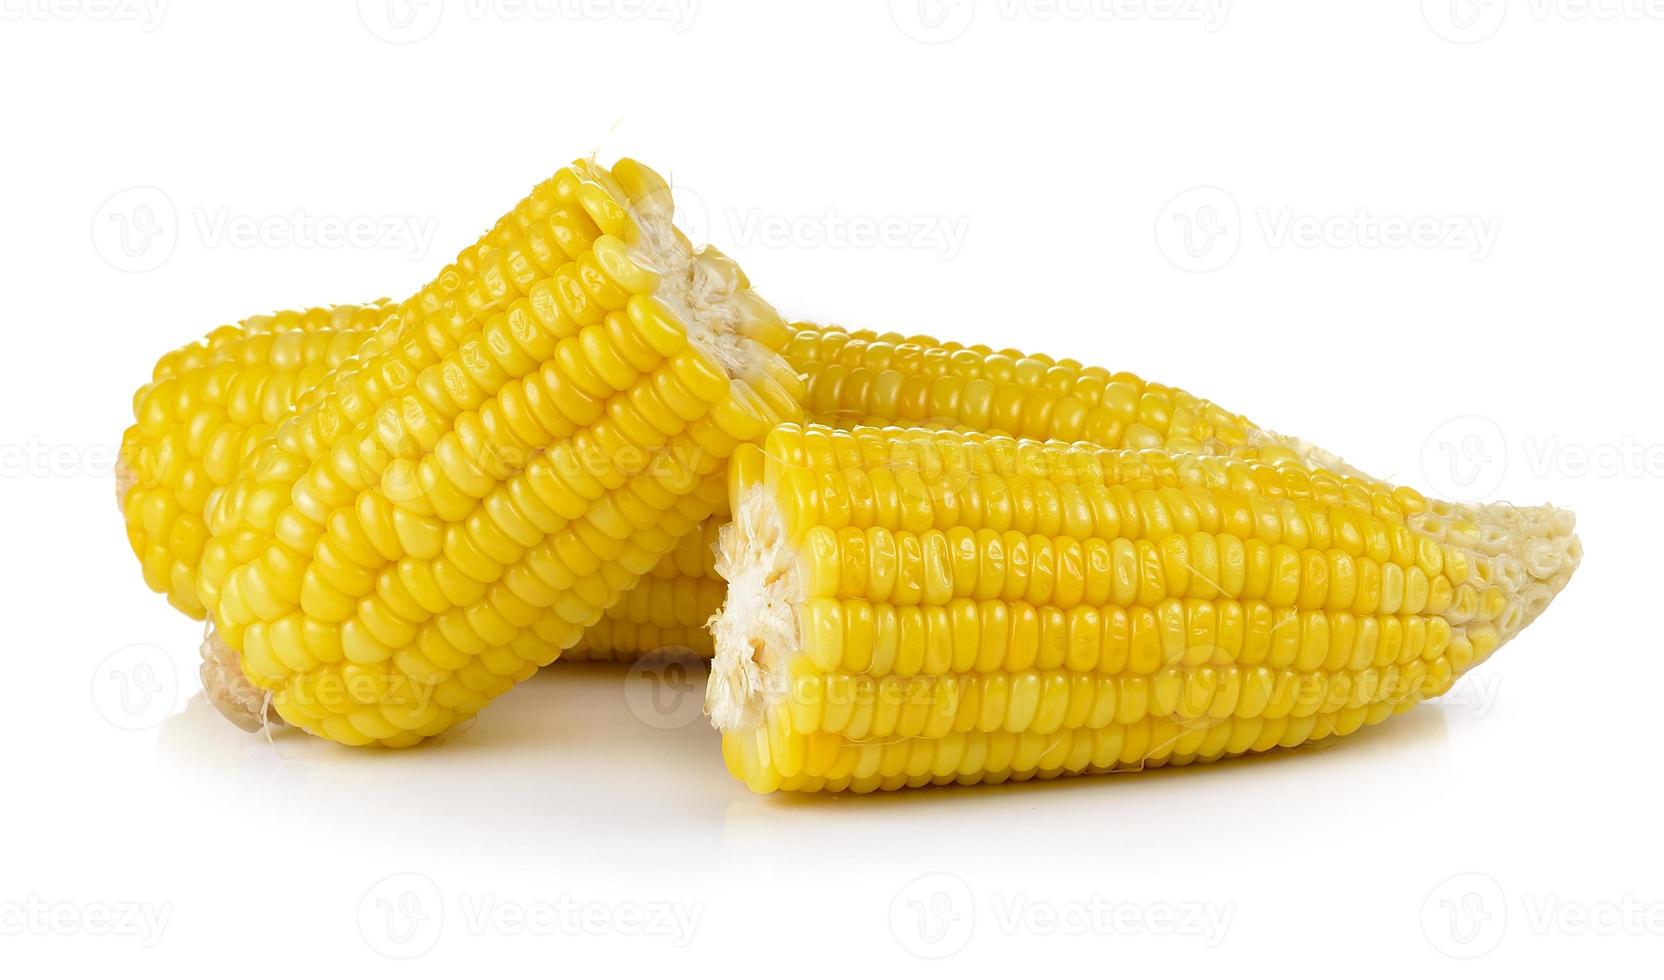 majs på vit bakgrund foto